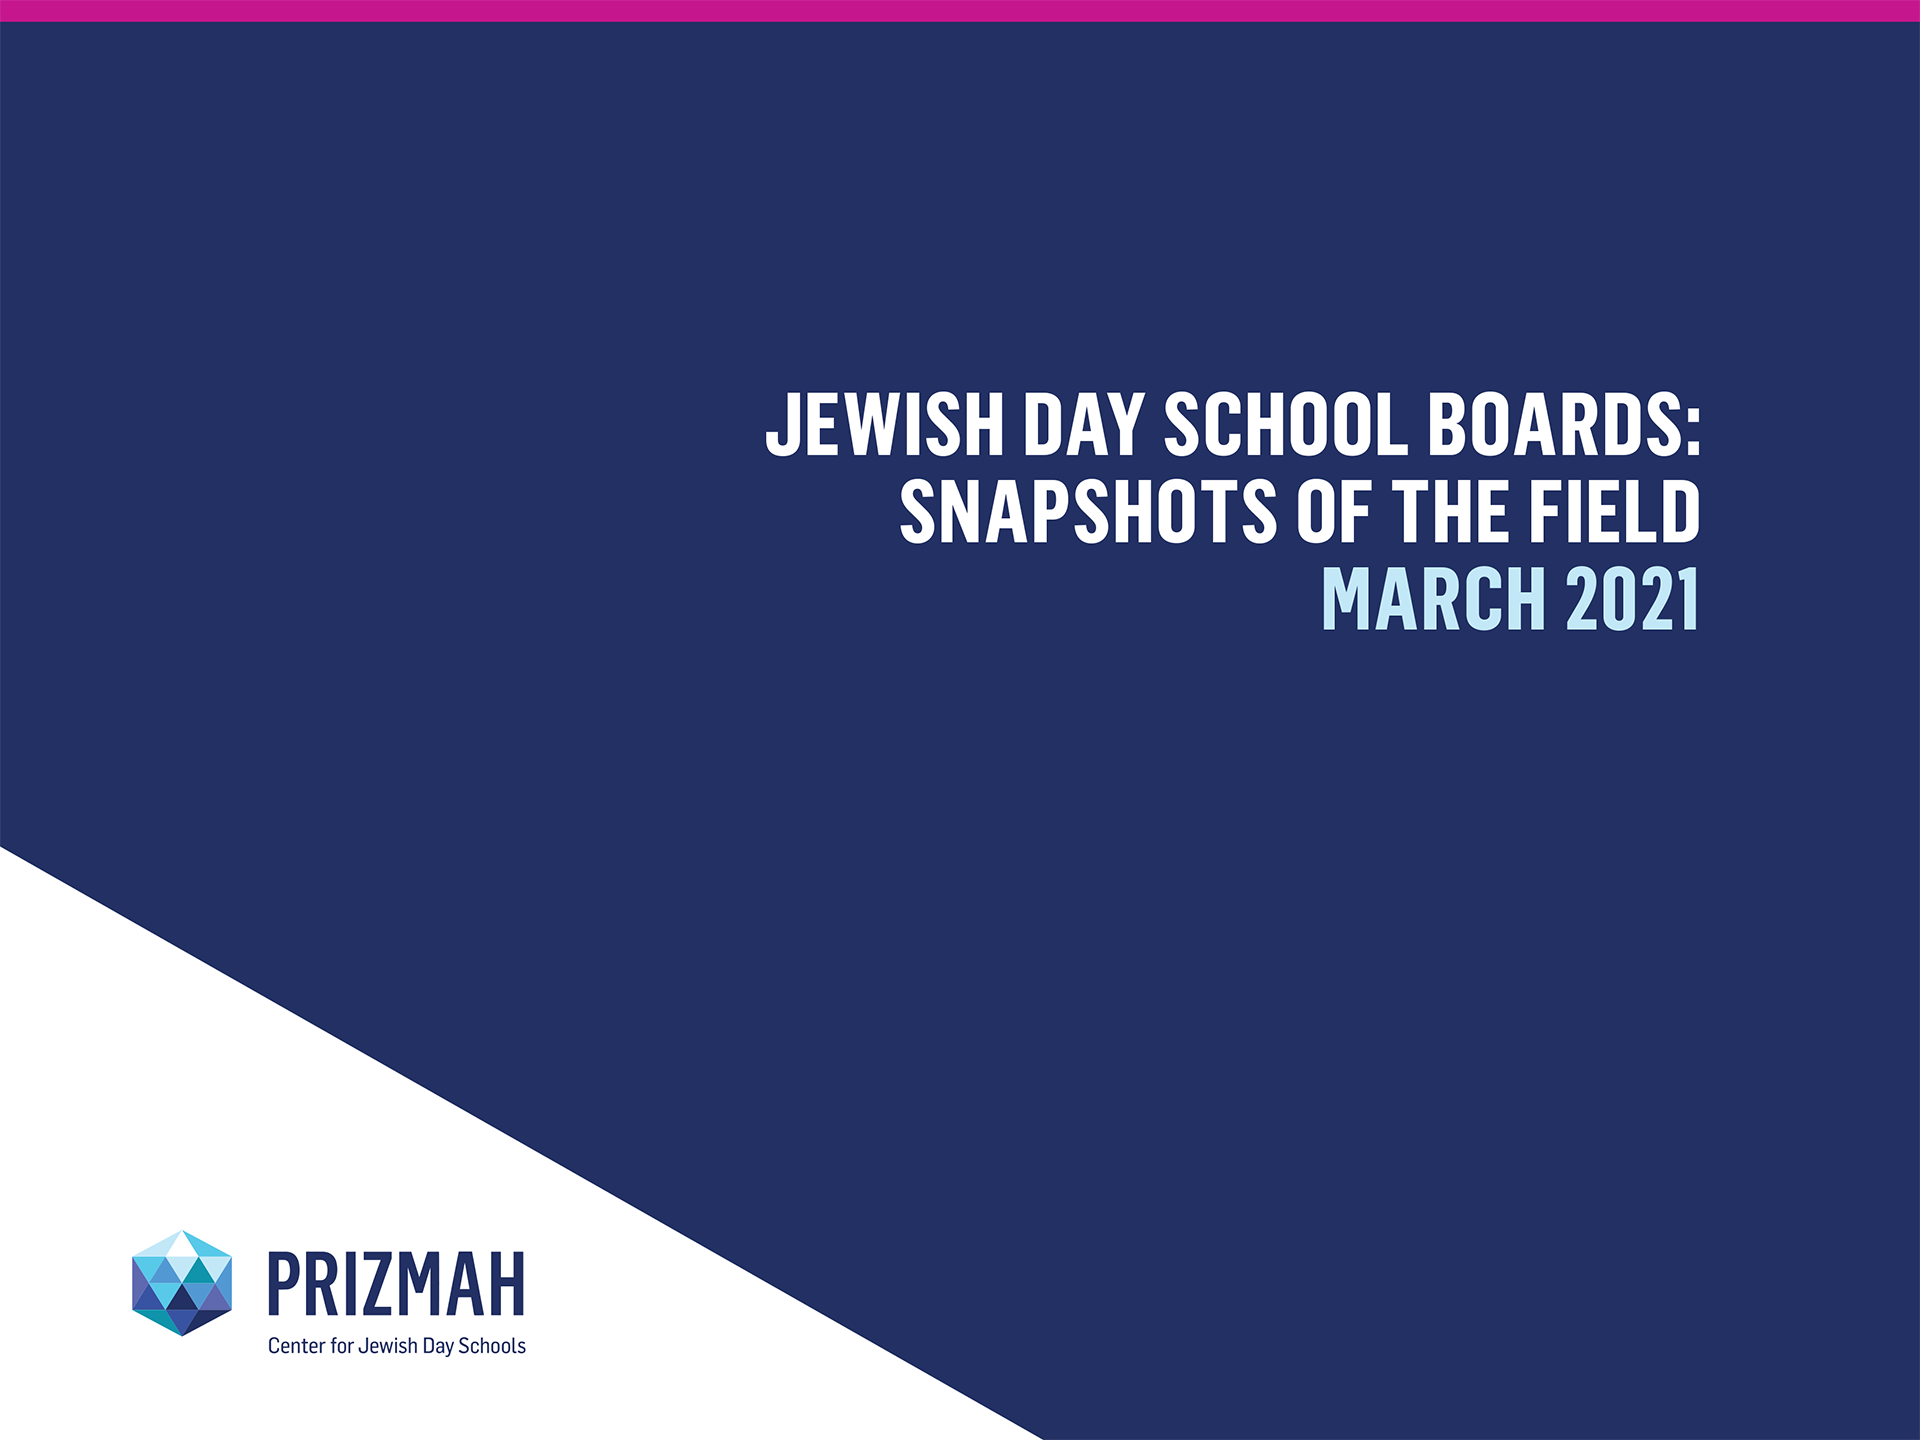 Jewish Day School Boards Snapshot of the Field